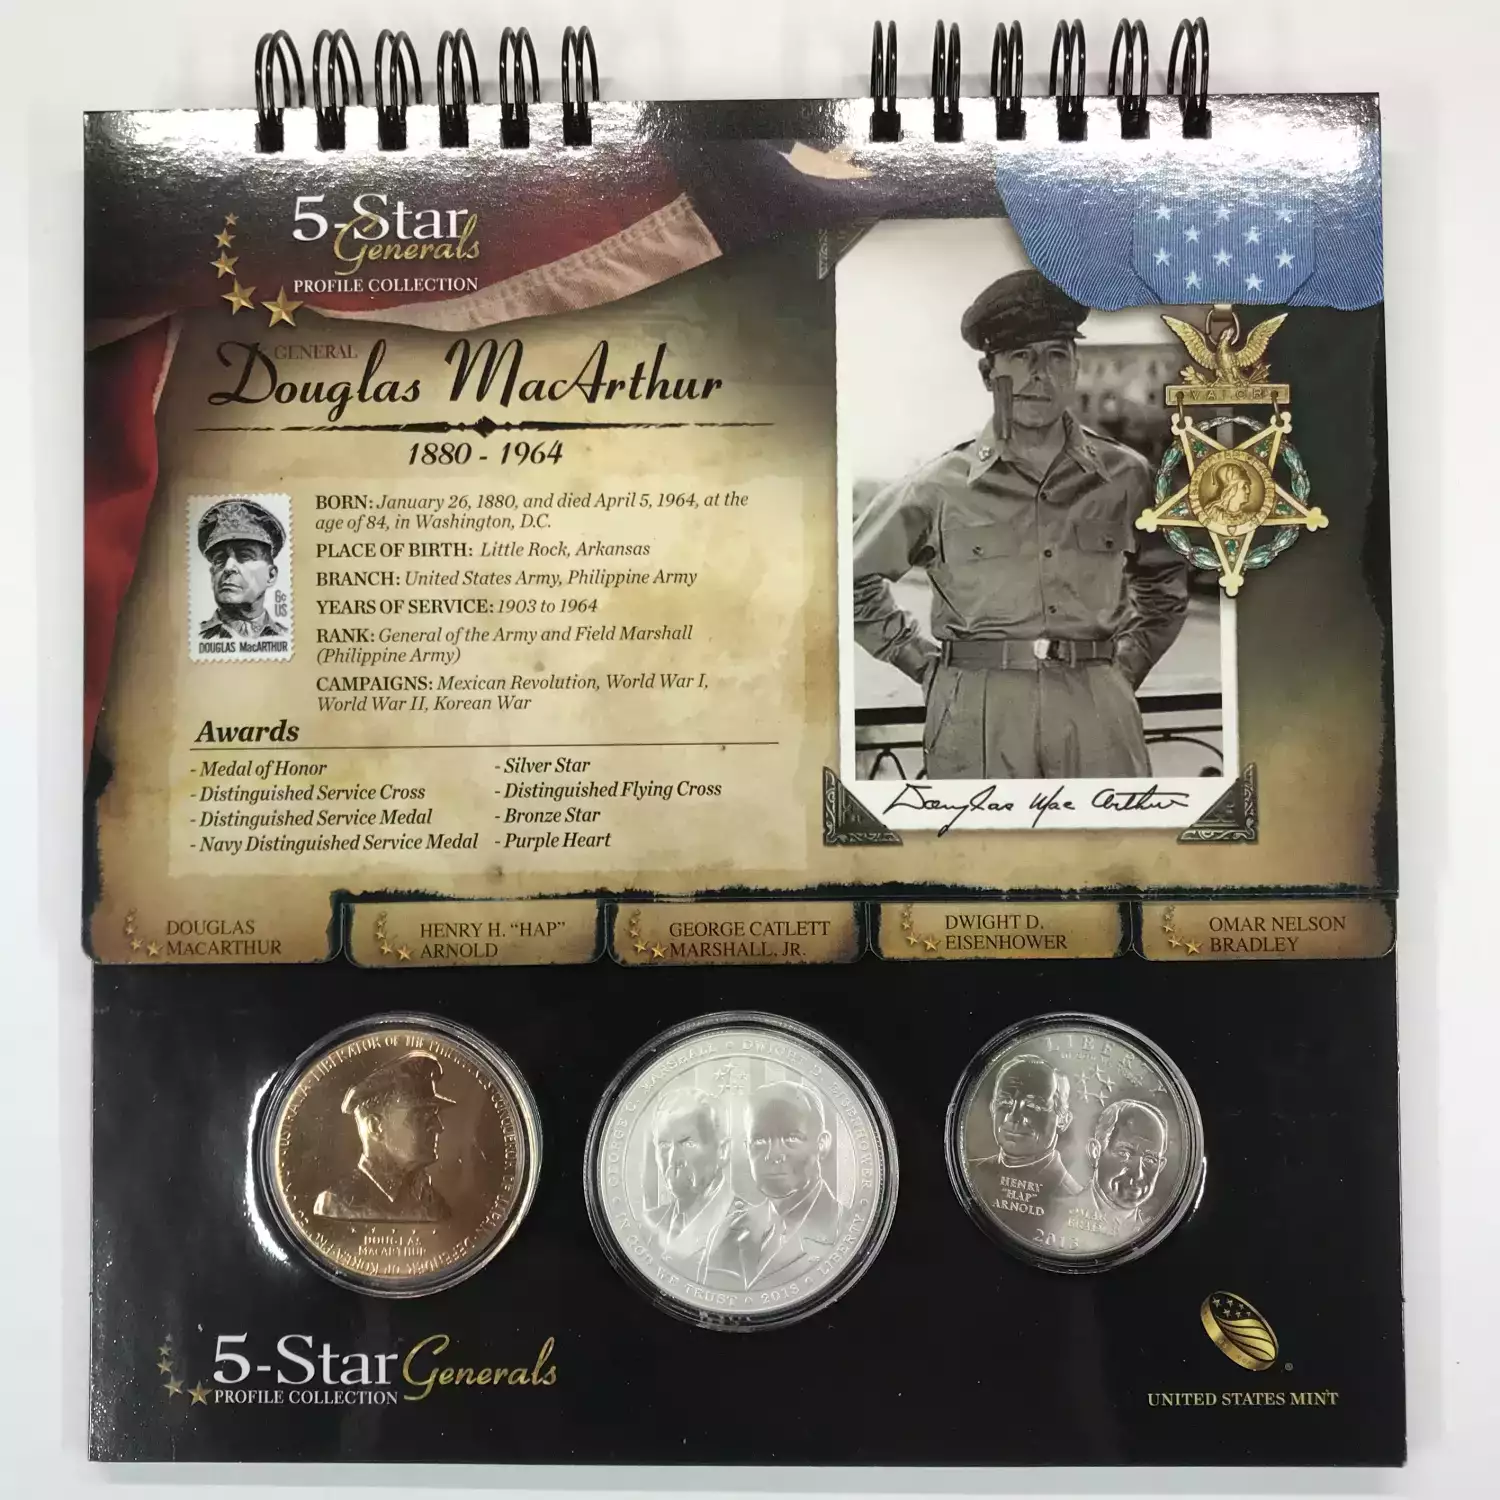 2013 5-Star Generals- Three Coin Set - Proof Clad Half Dollar, Silver Dollar & Gold $5 - Box & COA (10)